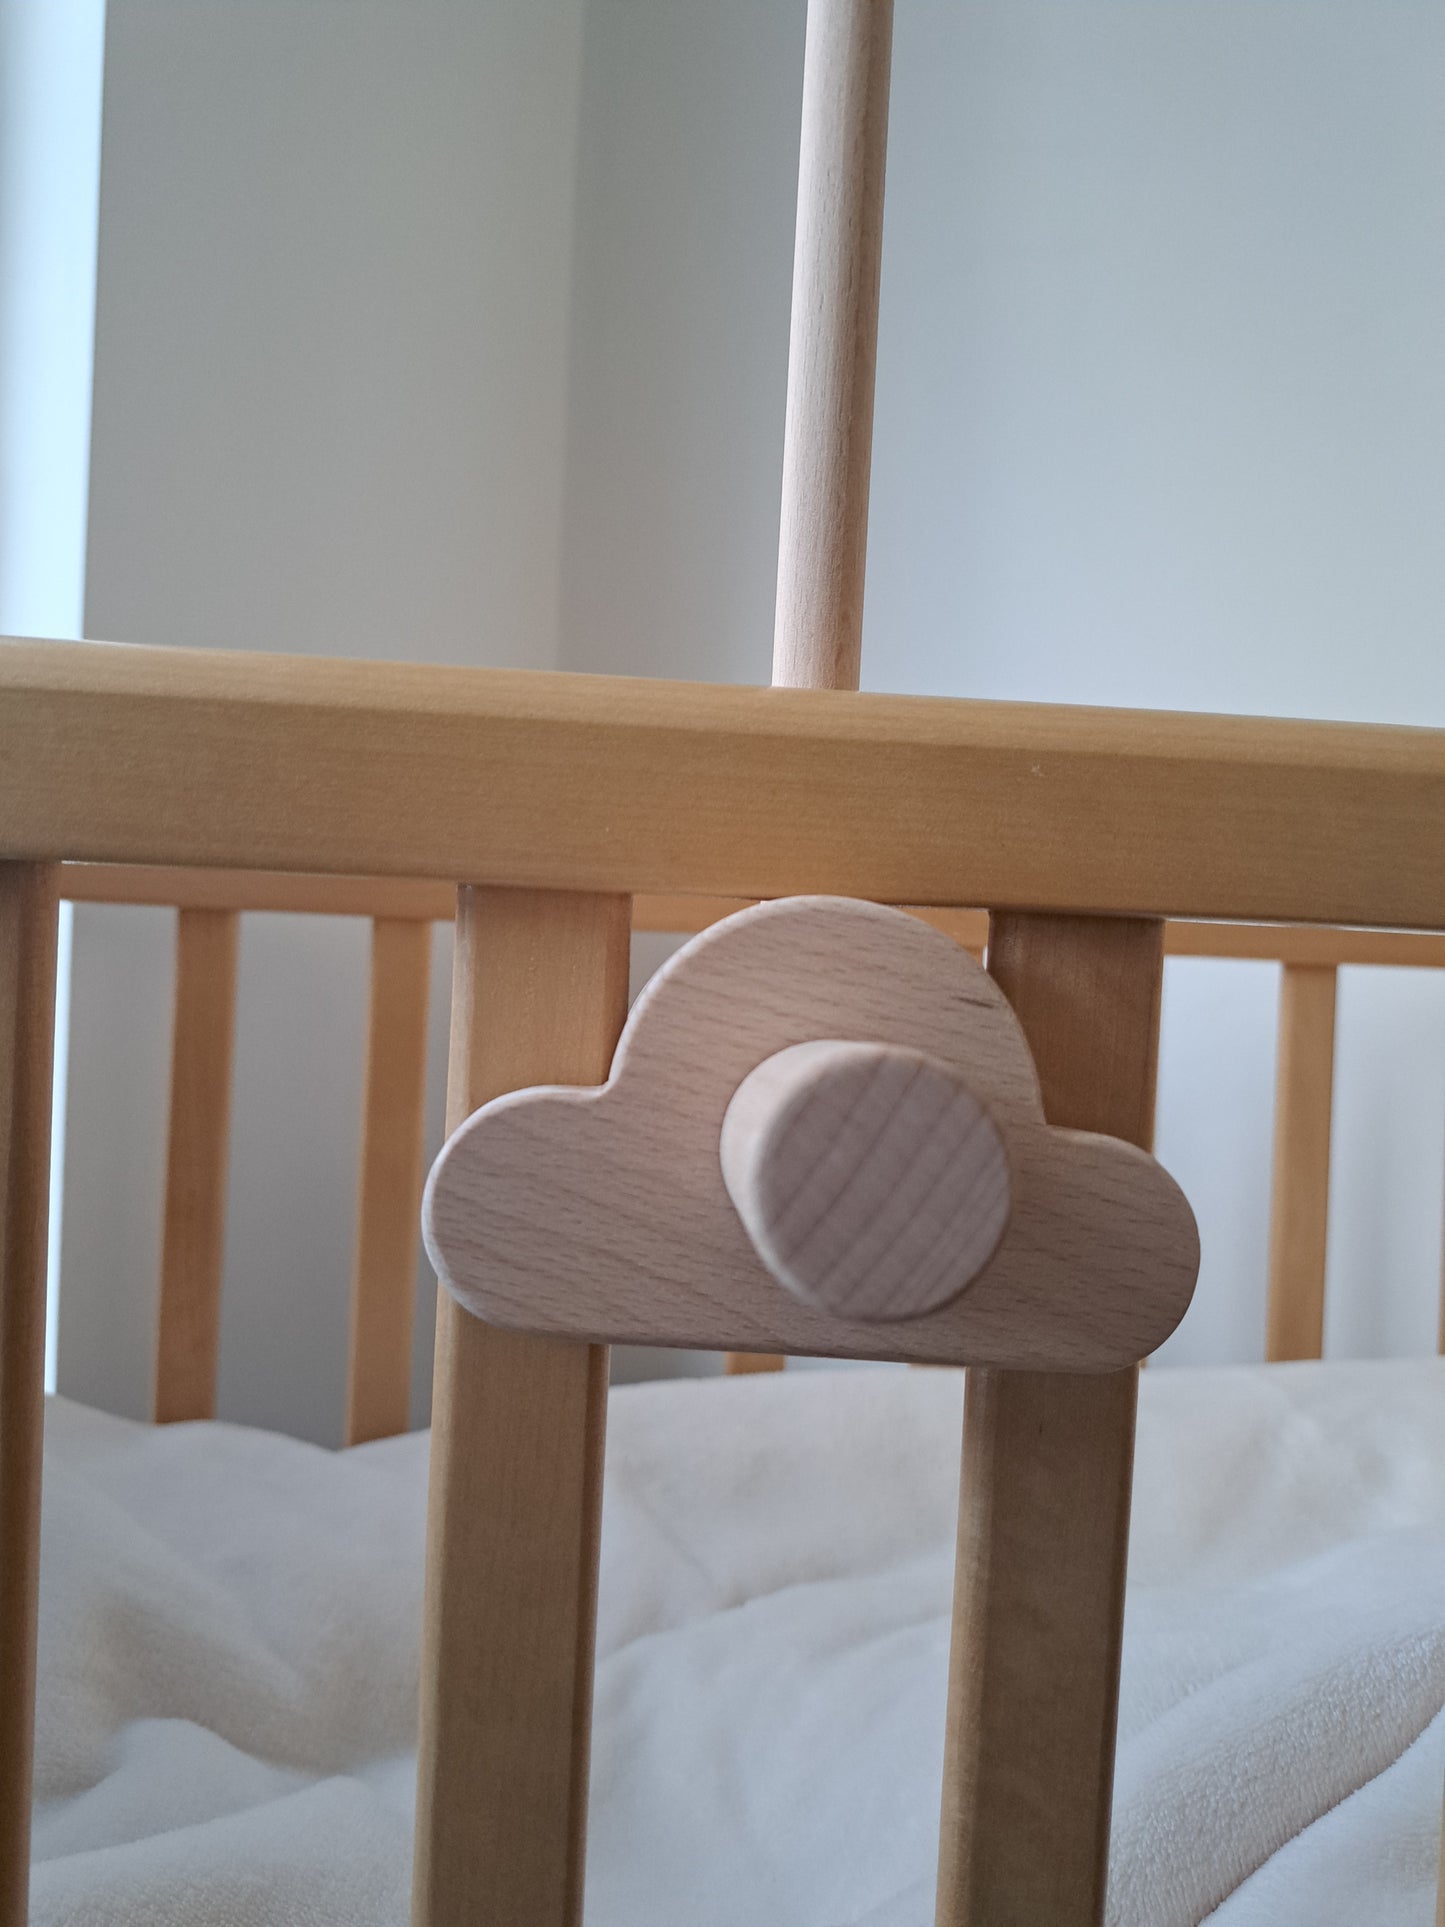 Wooden Cloud Baby Mobile Arm Bracket